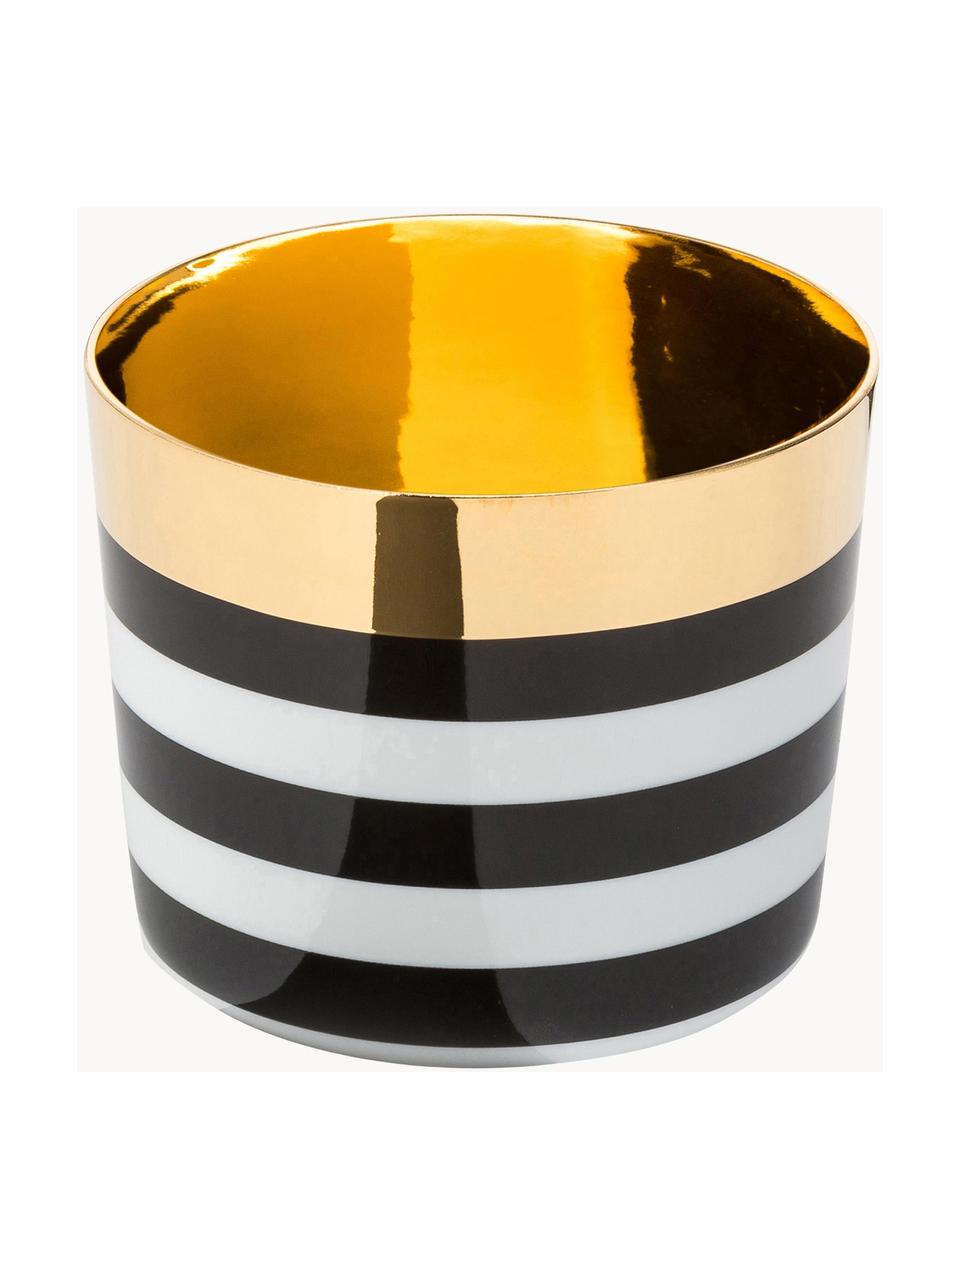 Taza para champán Sip of Gold, Borde: dorado, Negro, blanco, dorado, Ø 9 x Al 7 cm, 300 ml